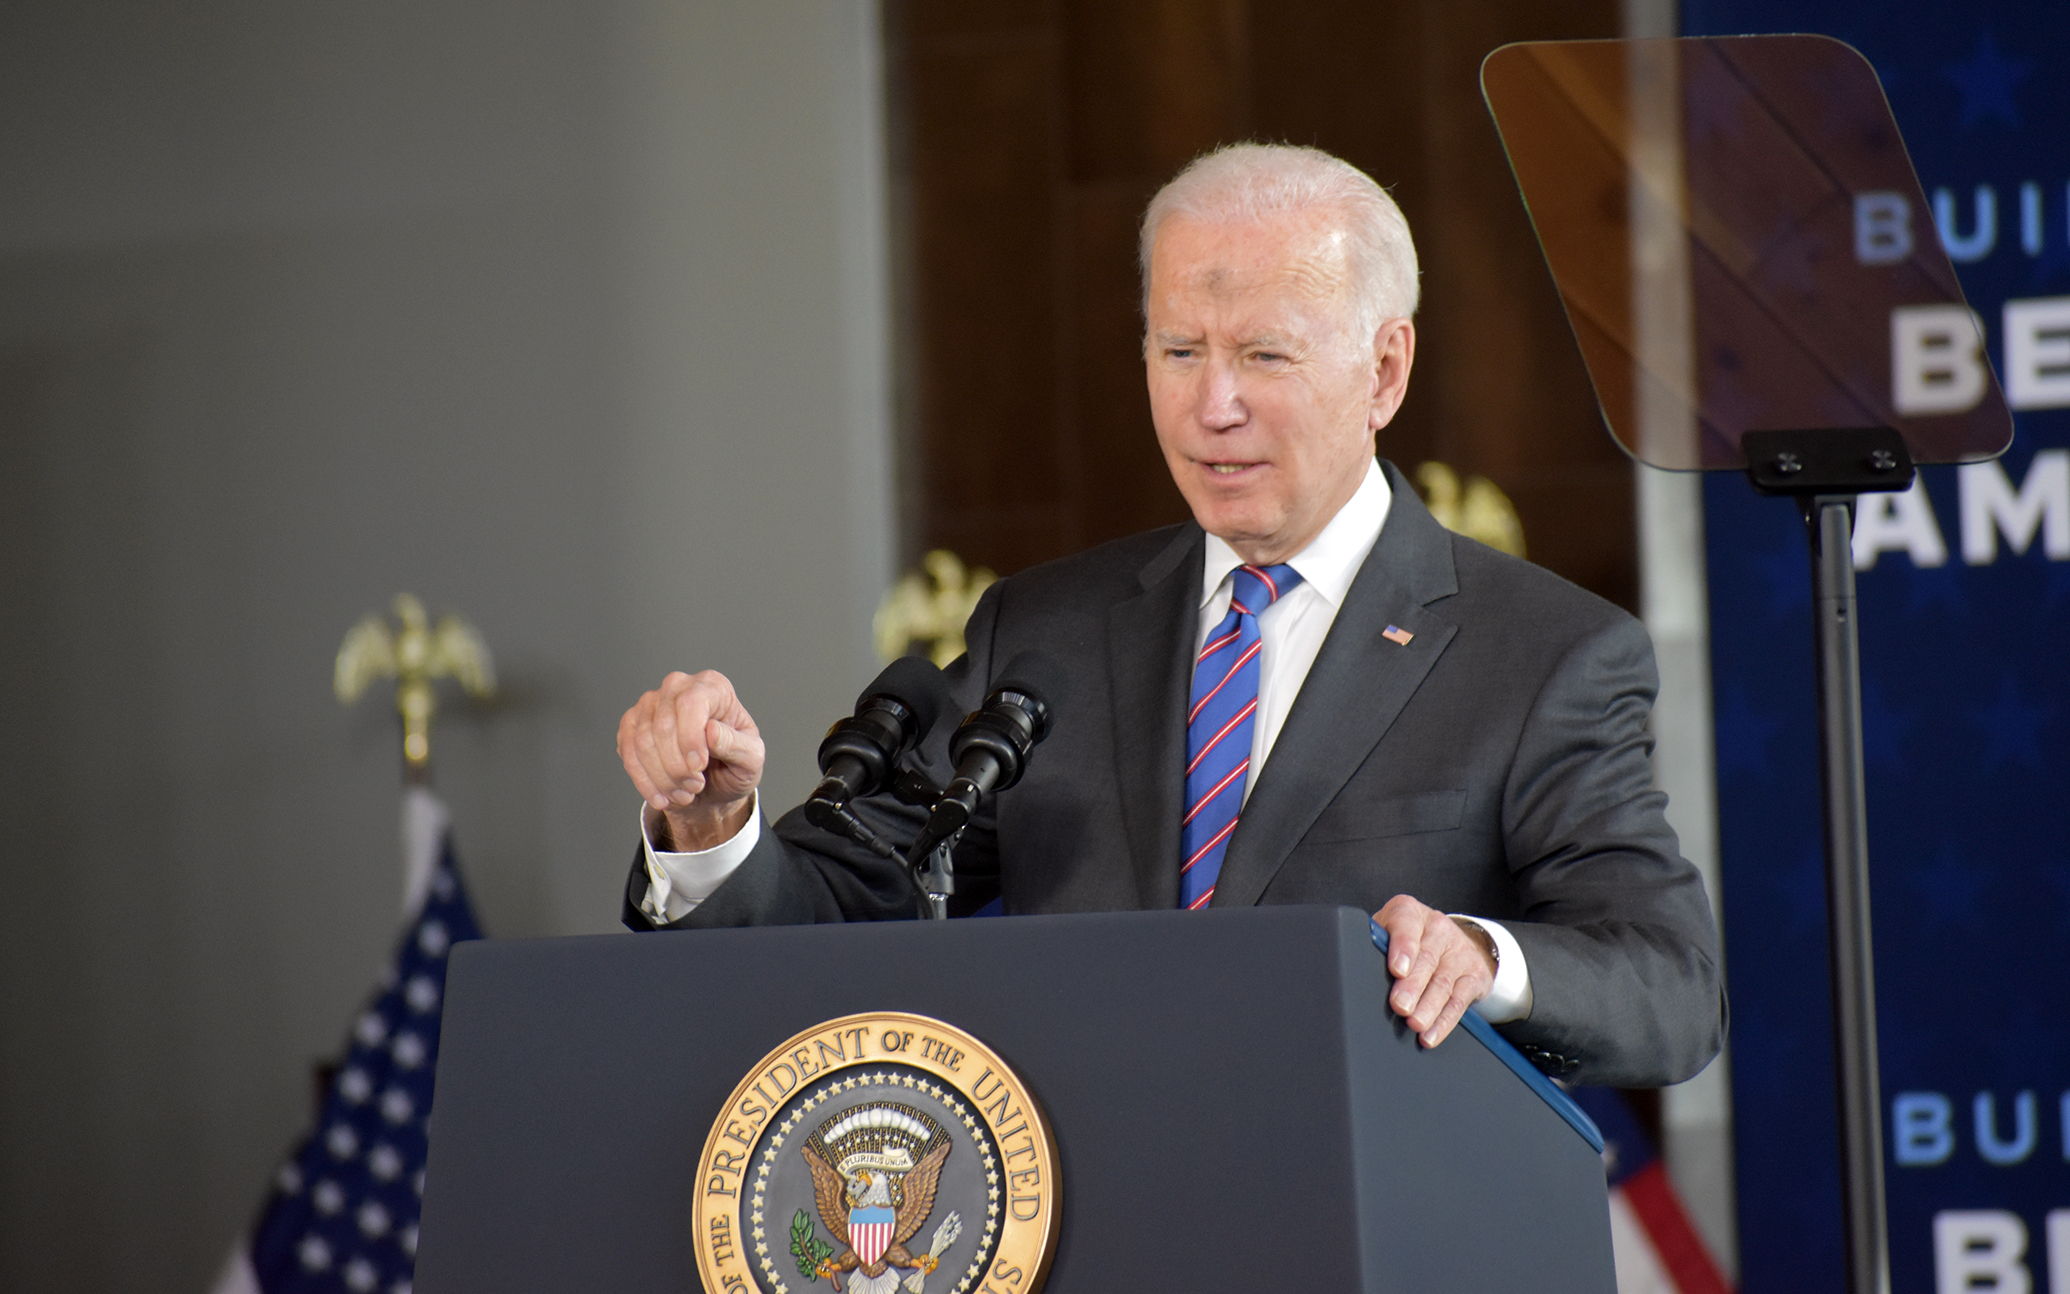 President Joe Biden visited Superior to tout his $1.2 trillion bipartisan infrastructure law